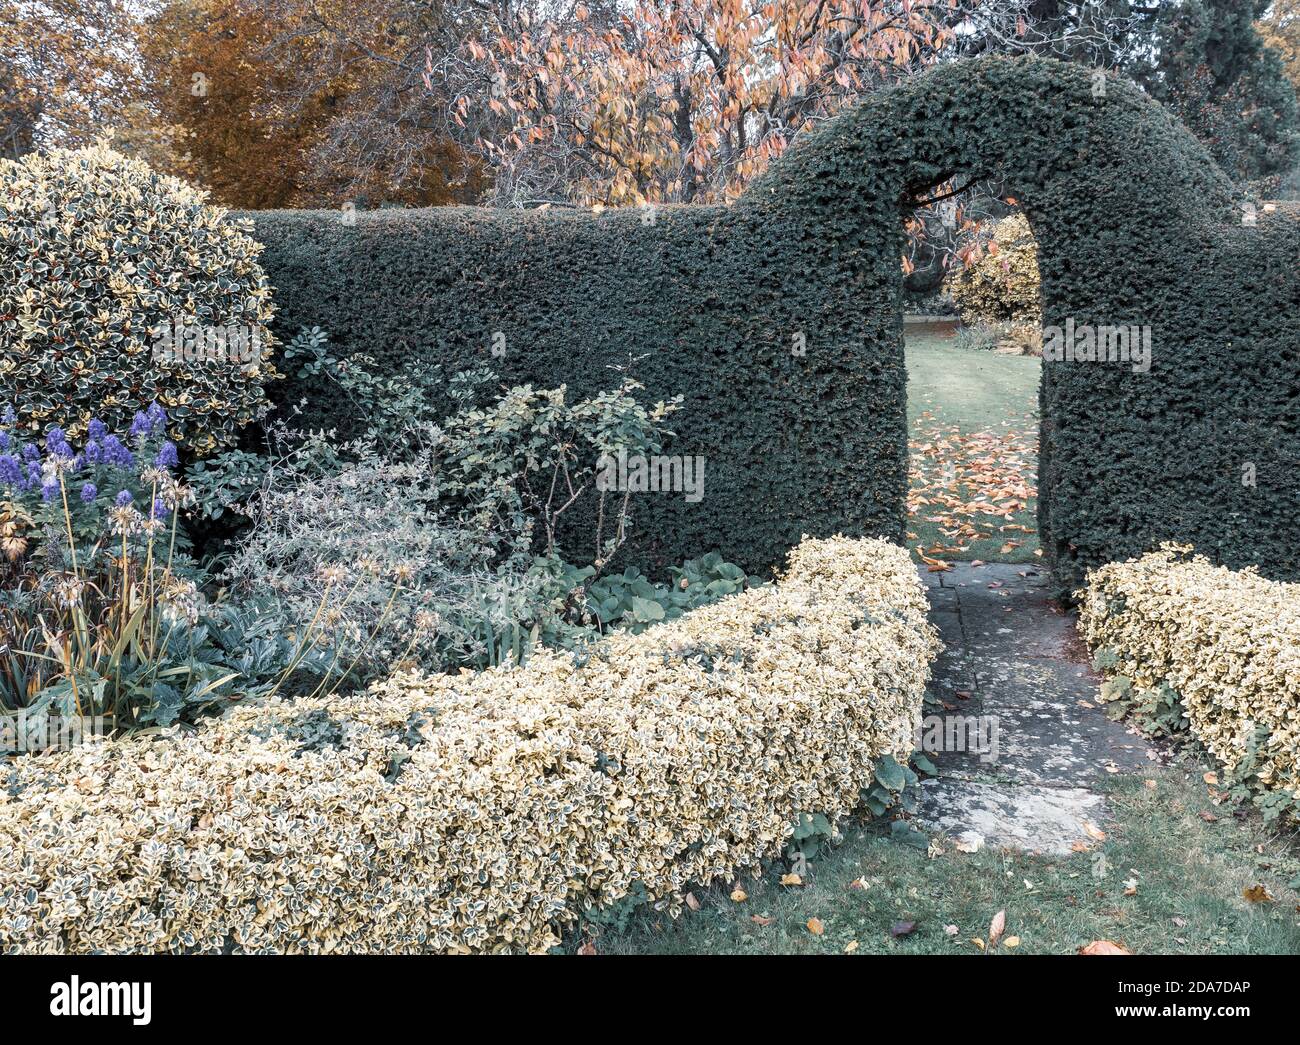 Garden Hedge and Flowers, Englefield House Gardens, Englefield, Berkshire, Inghilterra, Regno Unito, GB. Foto Stock